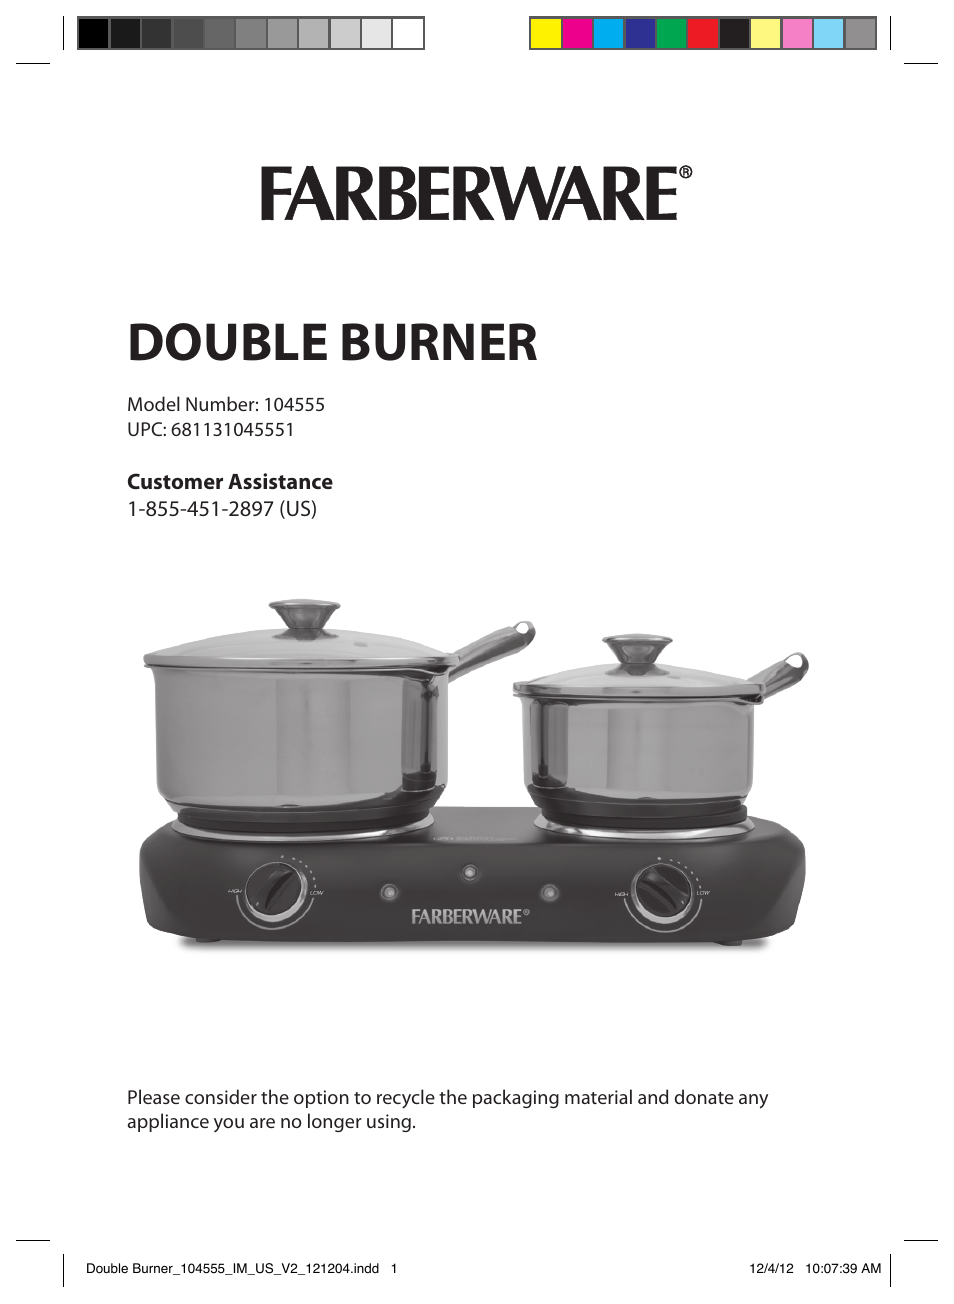 FARBERWARE 104555 Double Burner User Manual | 9 pages